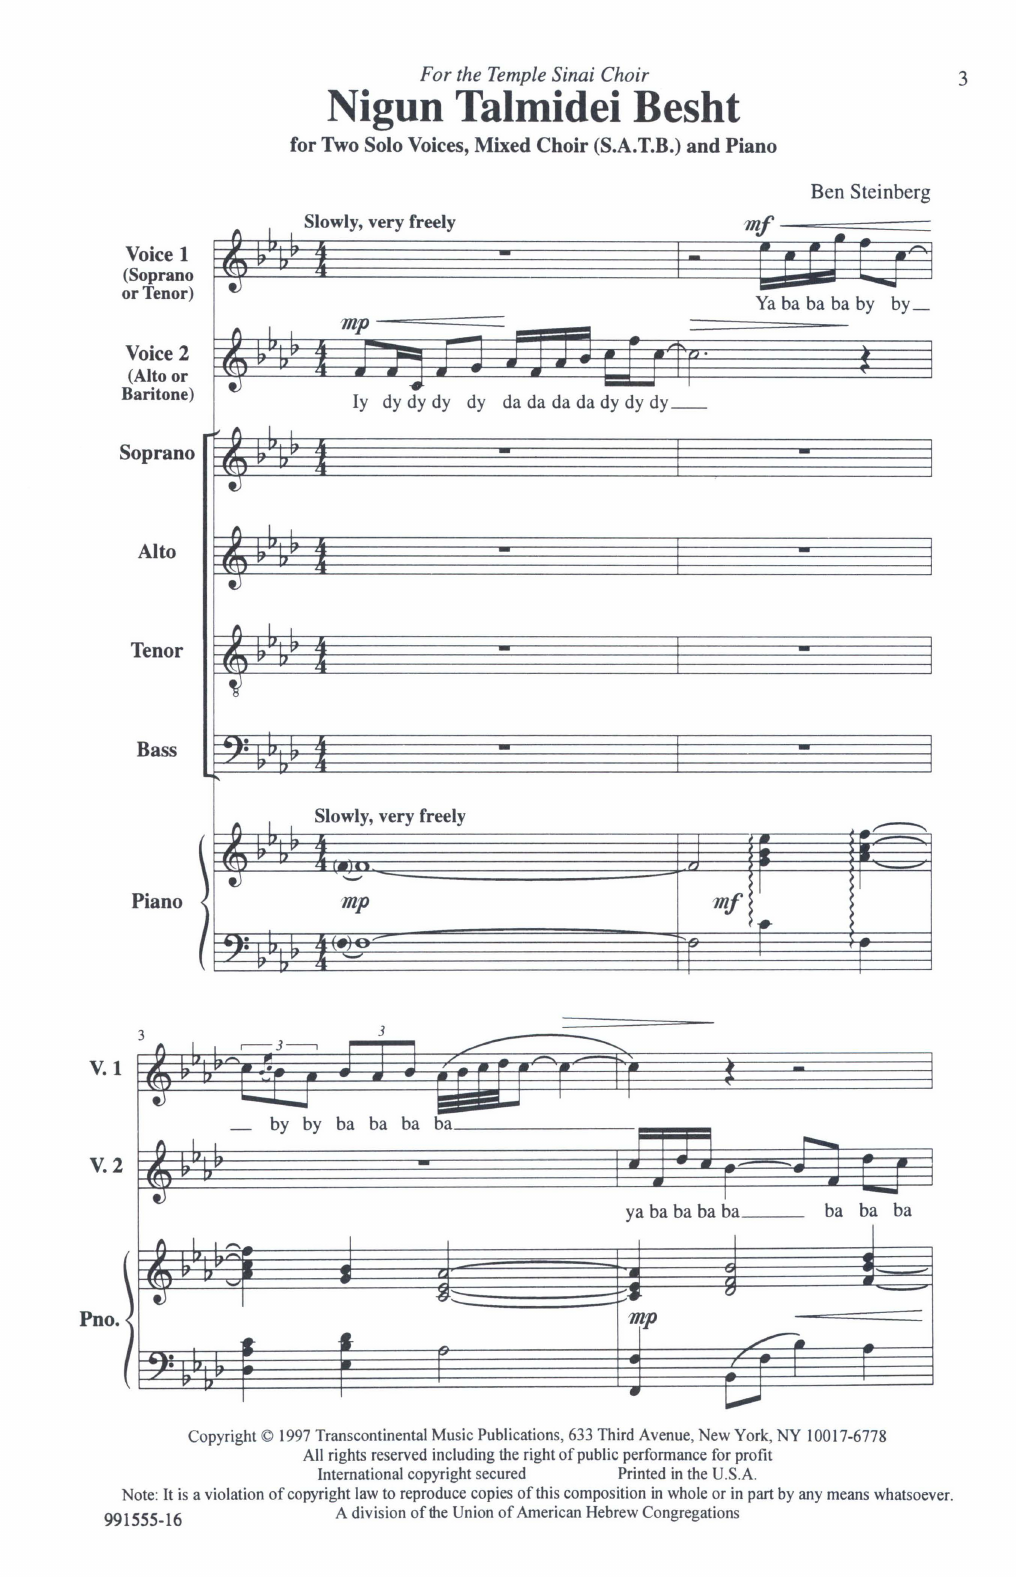 Download Ben Steinberg Nigun Talmidei Besht Sheet Music and learn how to play SATB Choir PDF digital score in minutes